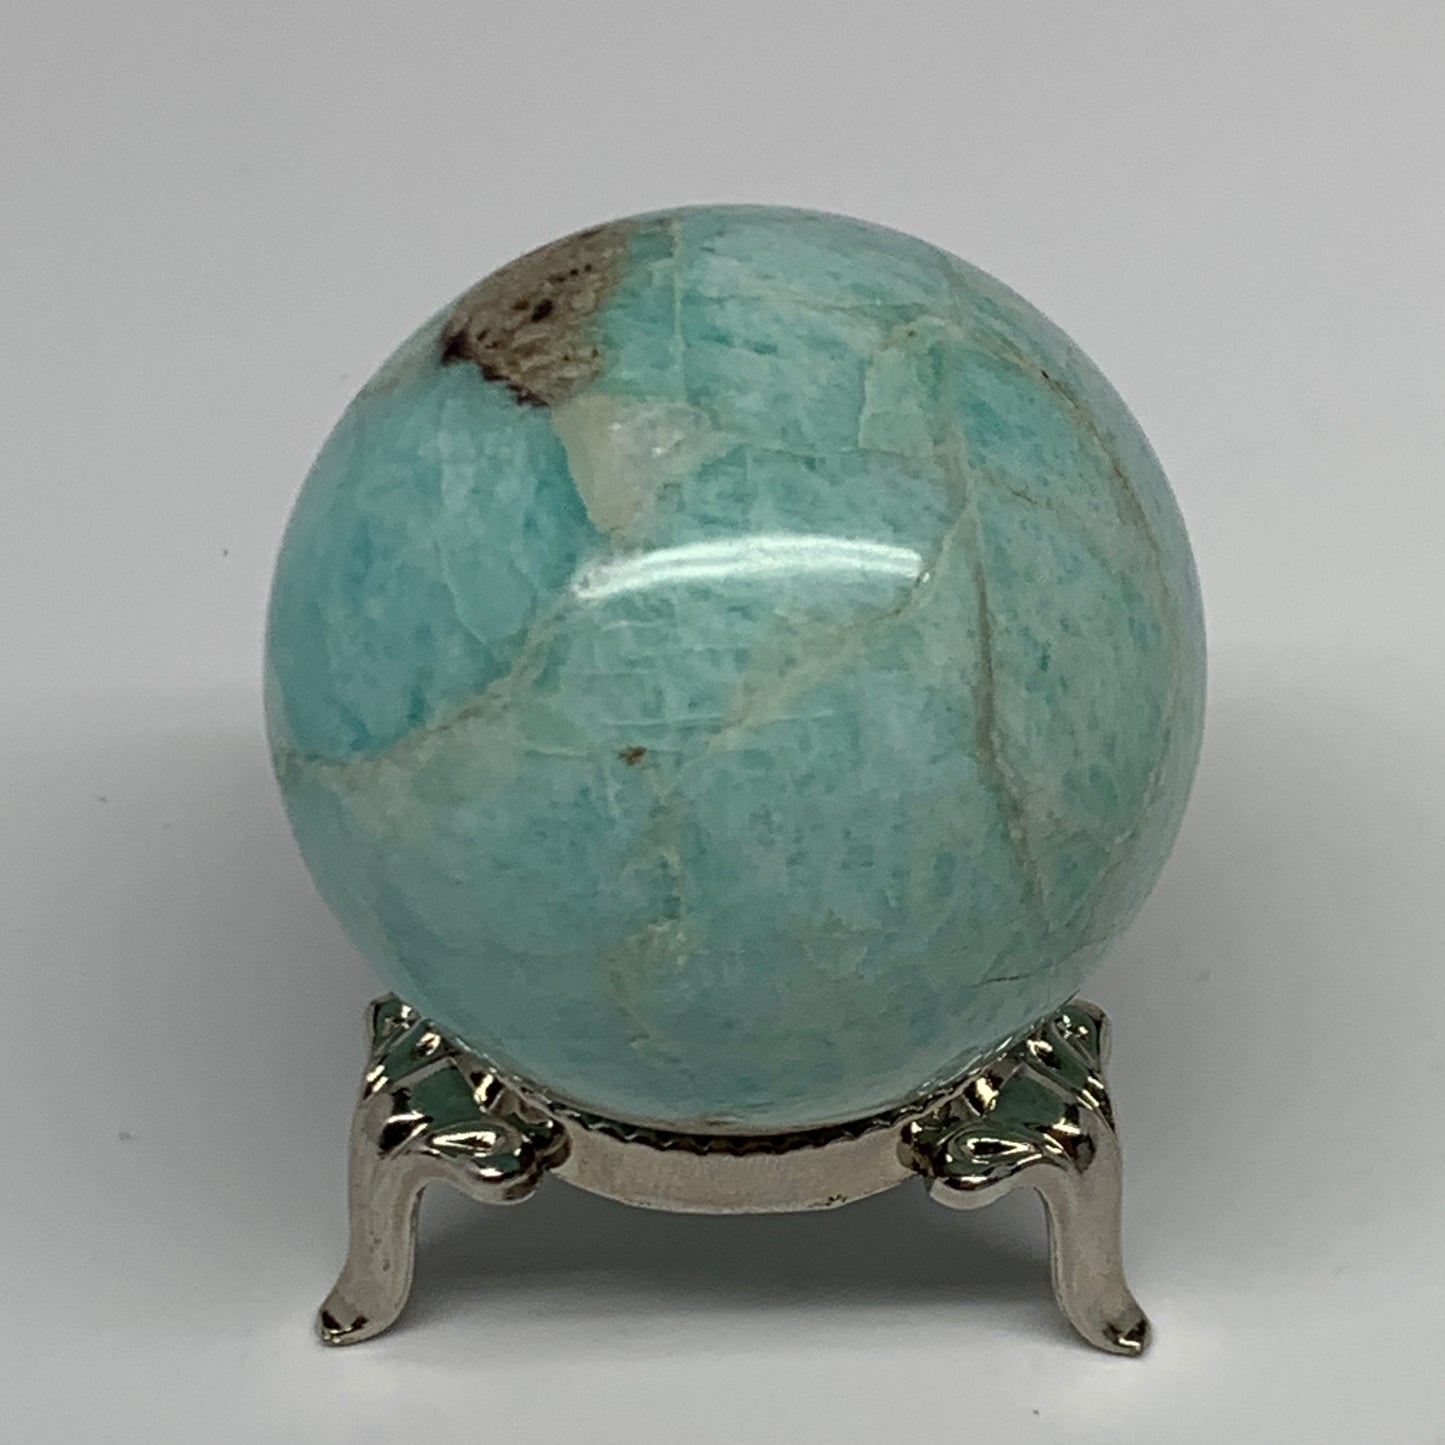 120.4g, 1.8" Small Amazonite Sphere Ball Gemstone from Madagascar, B15817